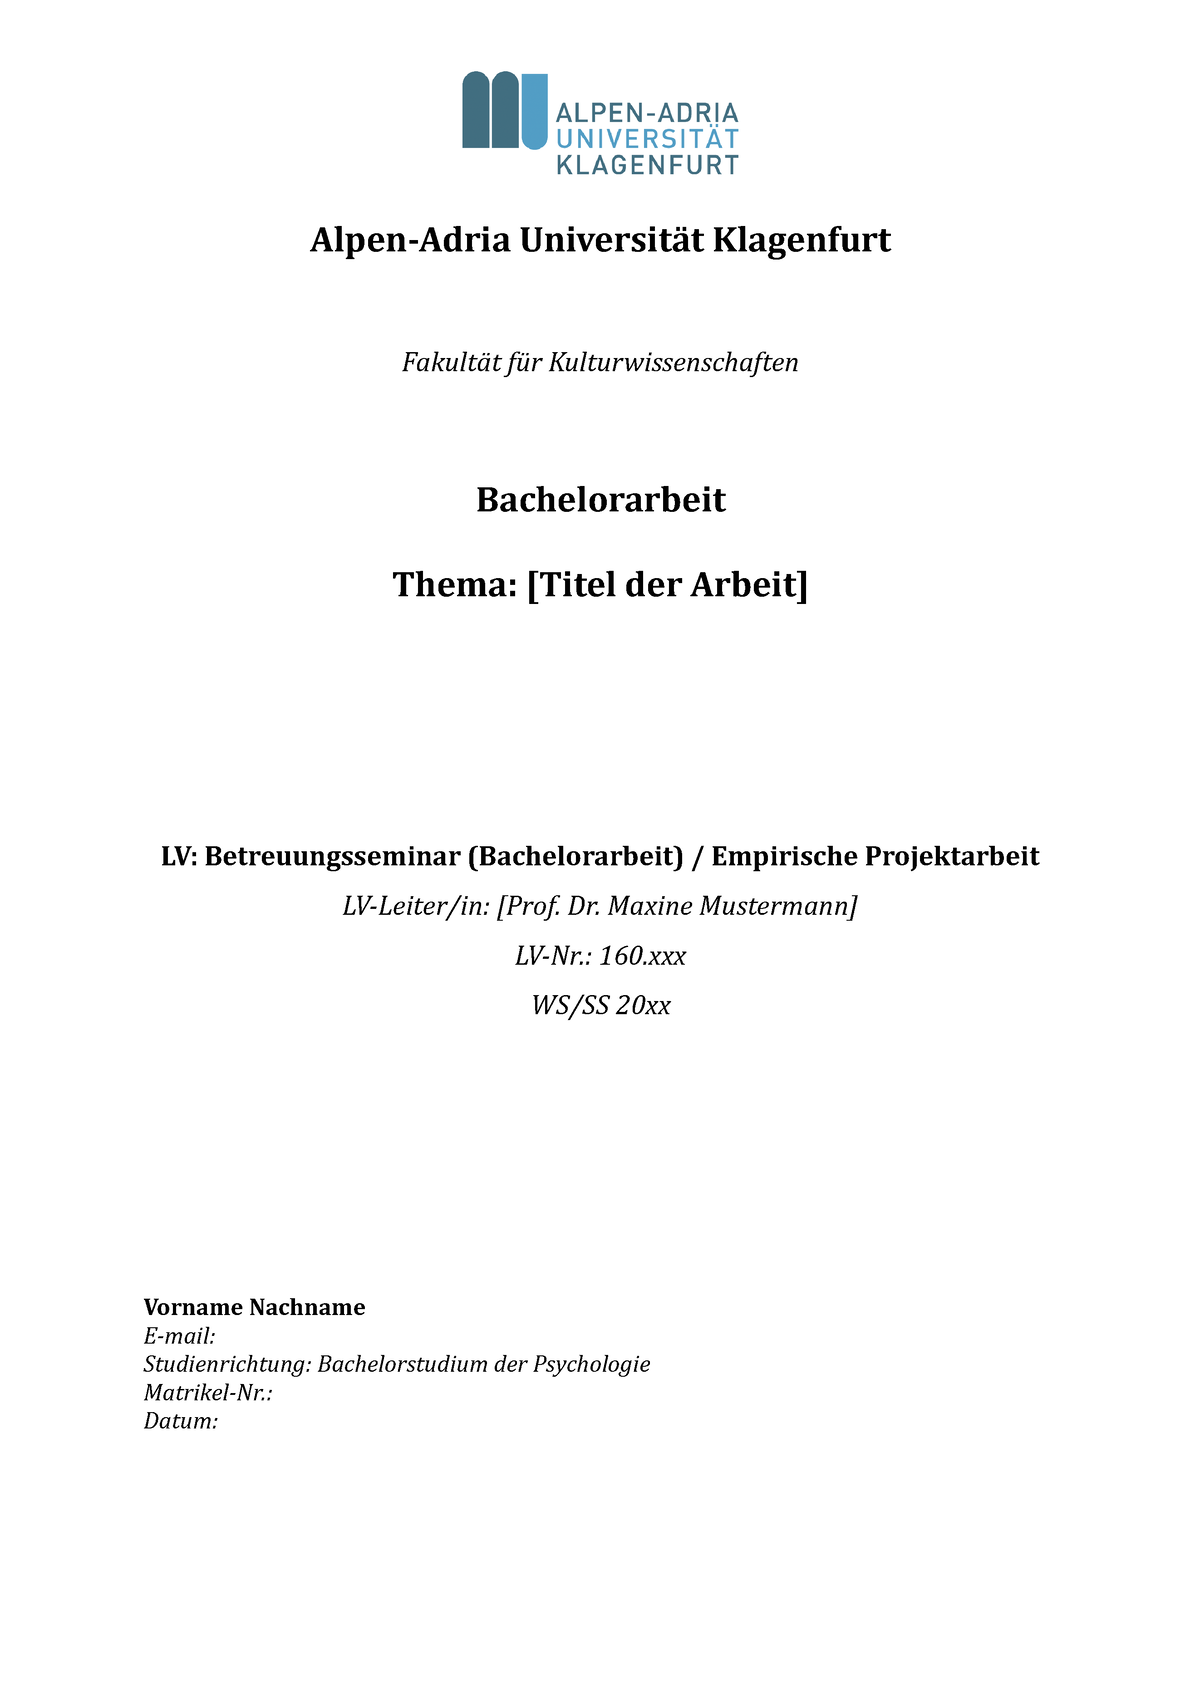 dissertation uni klagenfurt